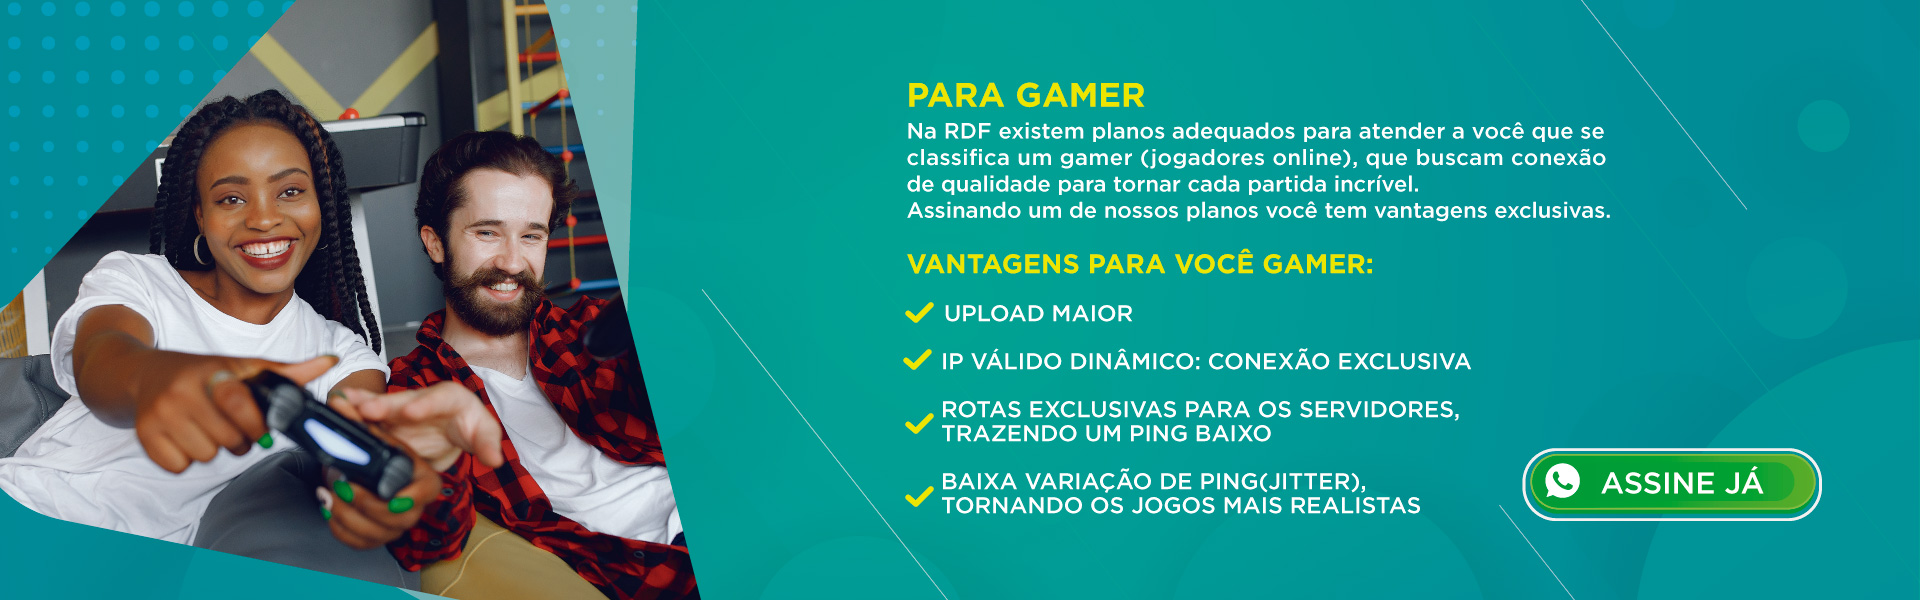 BG-Gamer-RDF (1)